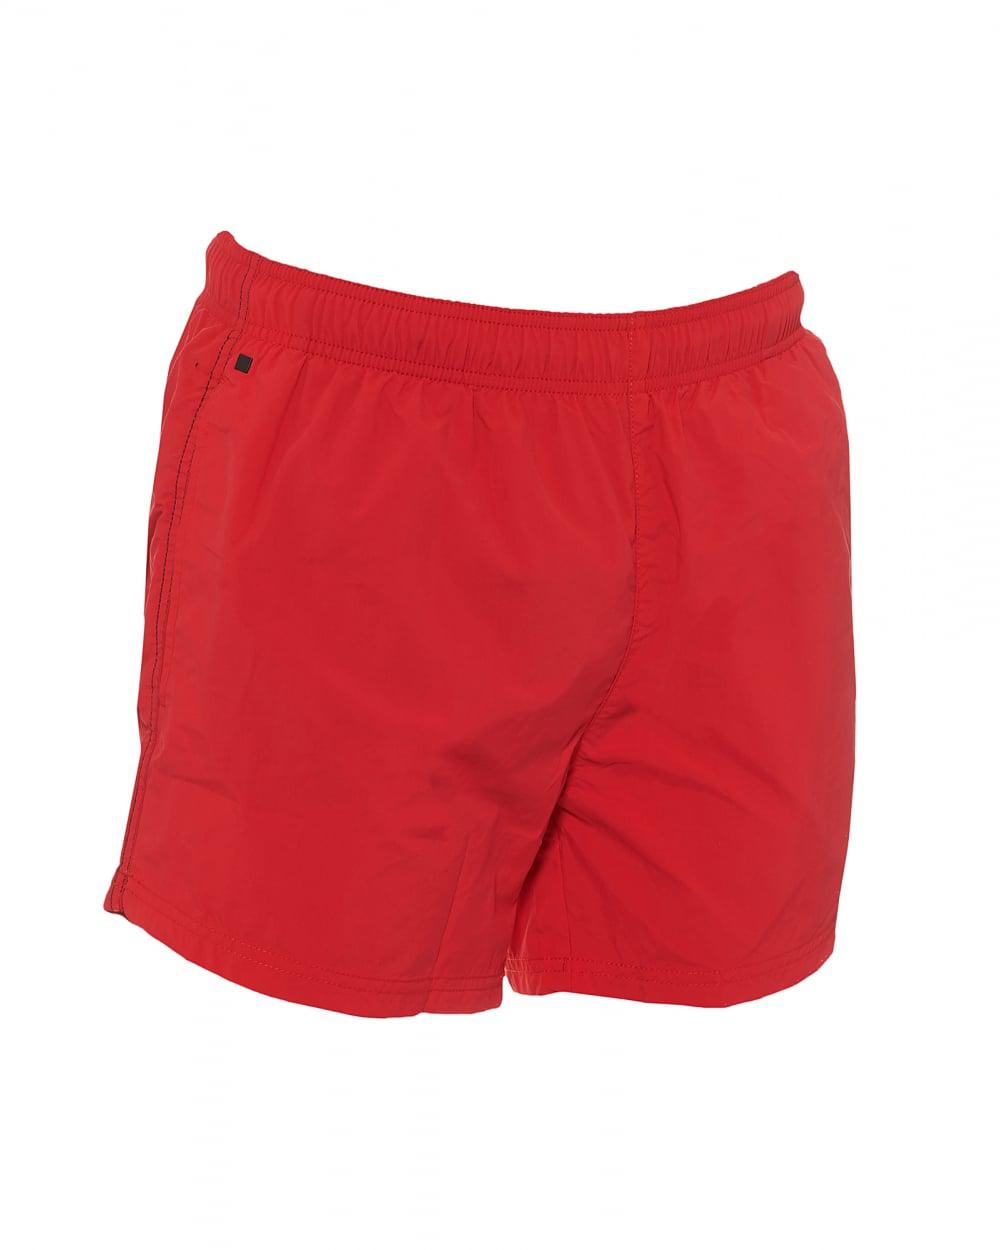 Hugo Boss Perch Swim Shorts Red